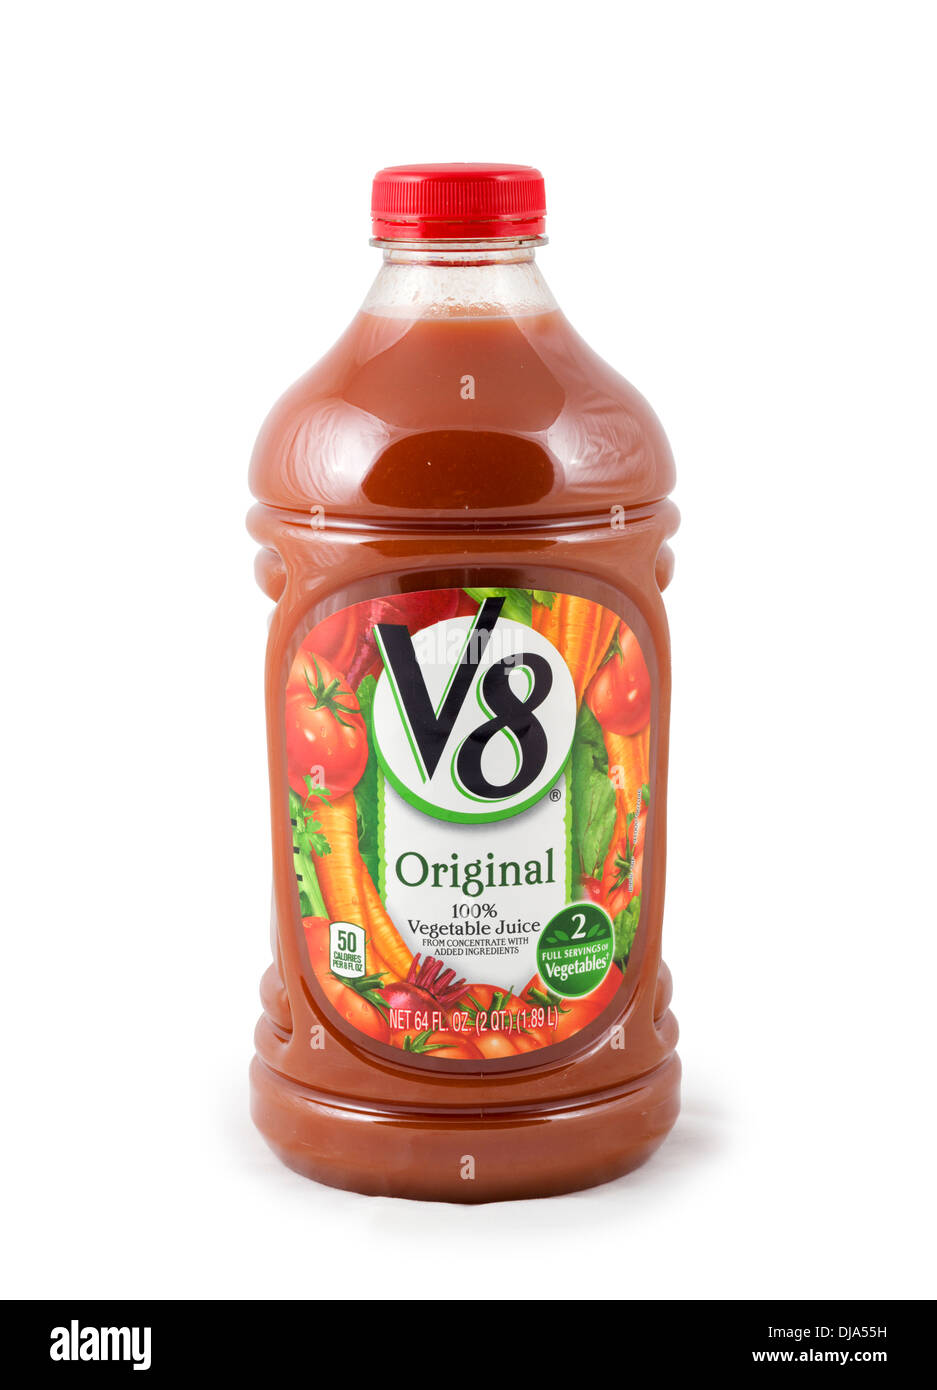 Bottle of V8 Original Vegetable Juice, USA Stock Photo